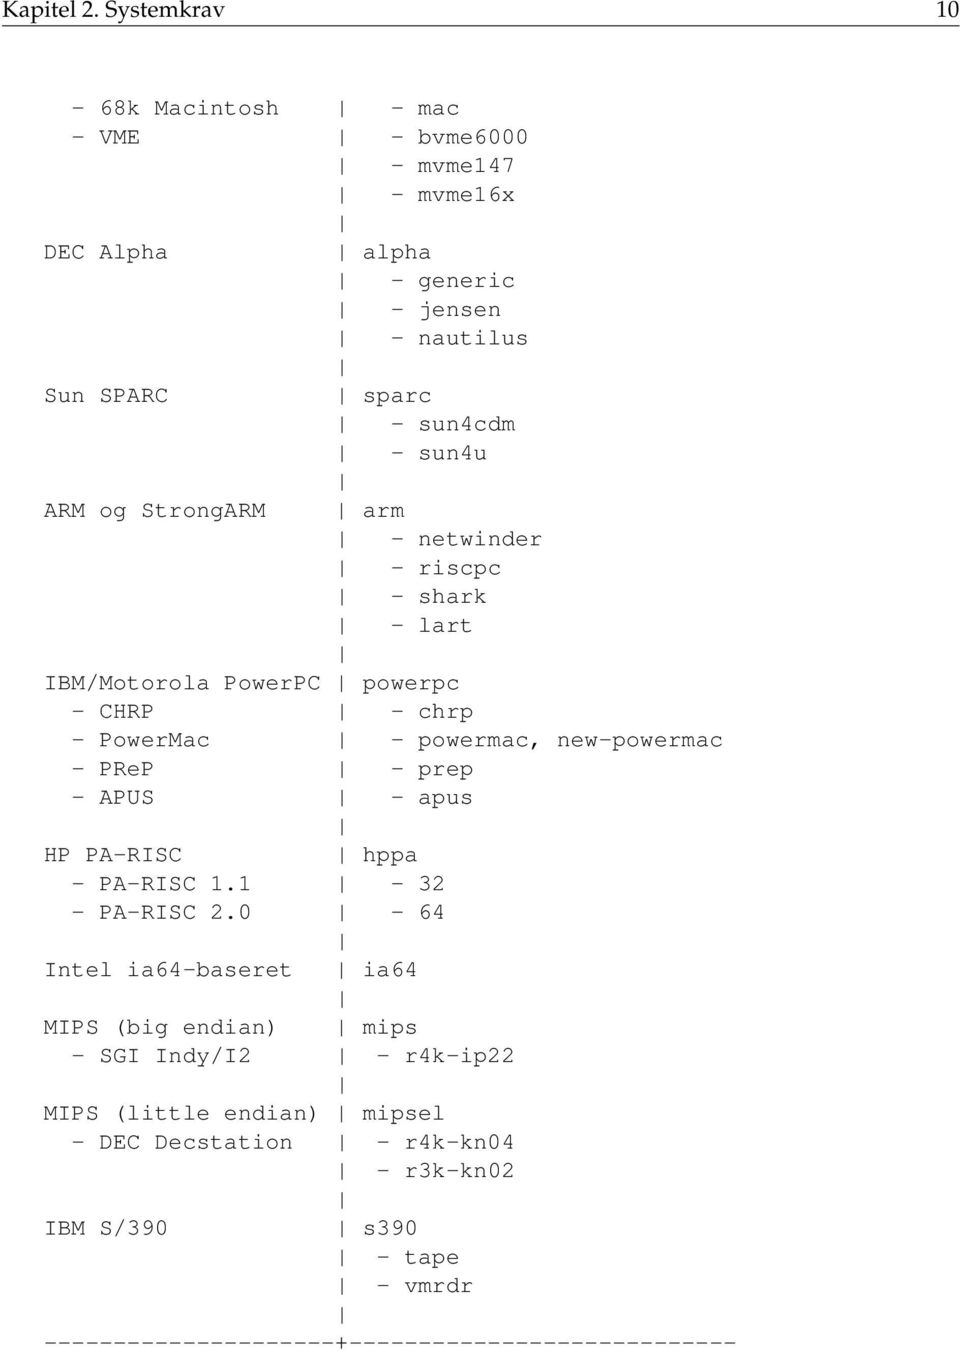 sun4u ARM og StrongARM arm - netwinder - riscpc - shark - lart IBM/Motorola PowerPC powerpc - CHRP - chrp - PowerMac - powermac, new-powermac - PReP